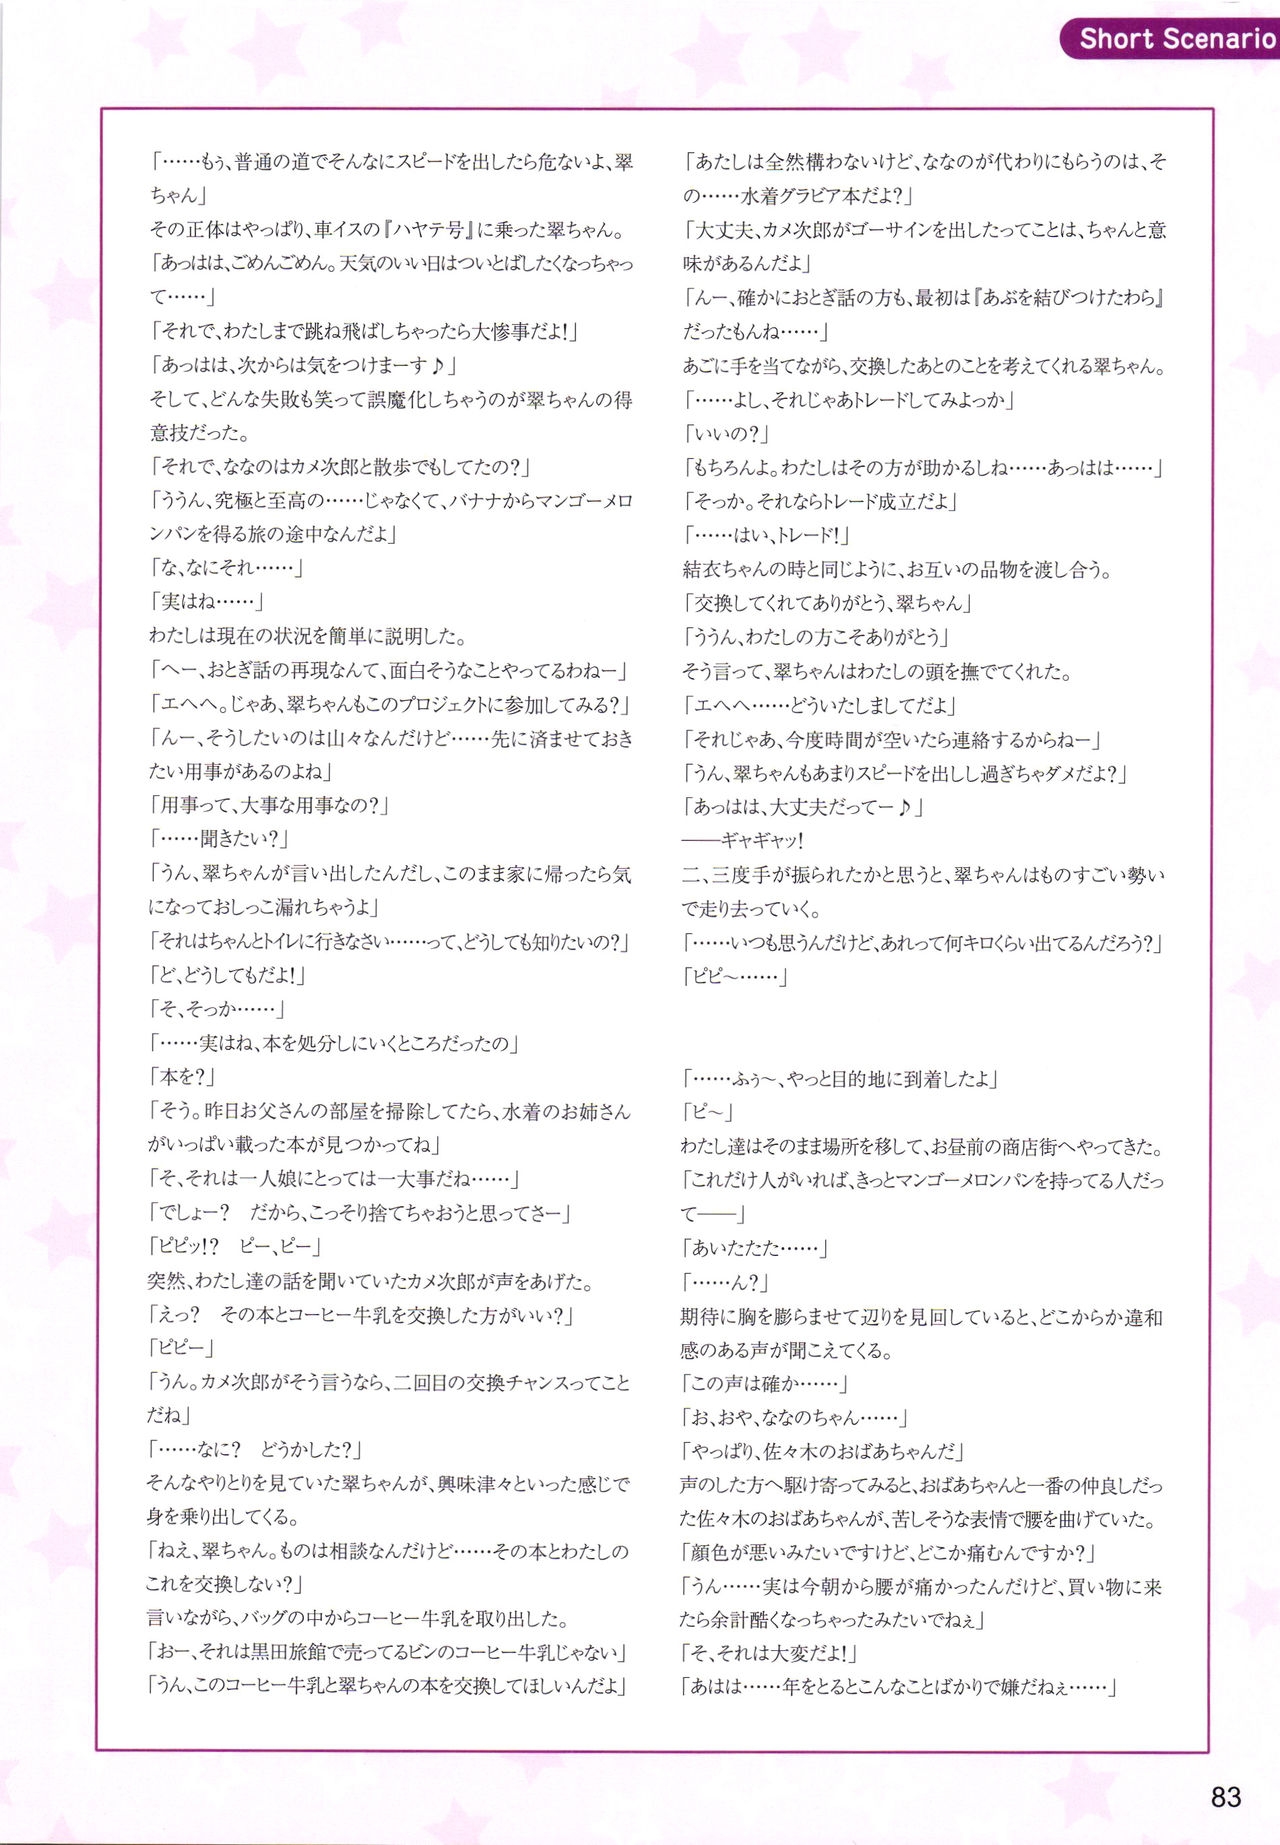 [FrontWing] Hoshiuta syokai tokuten Fanbook ～Memories～ 86